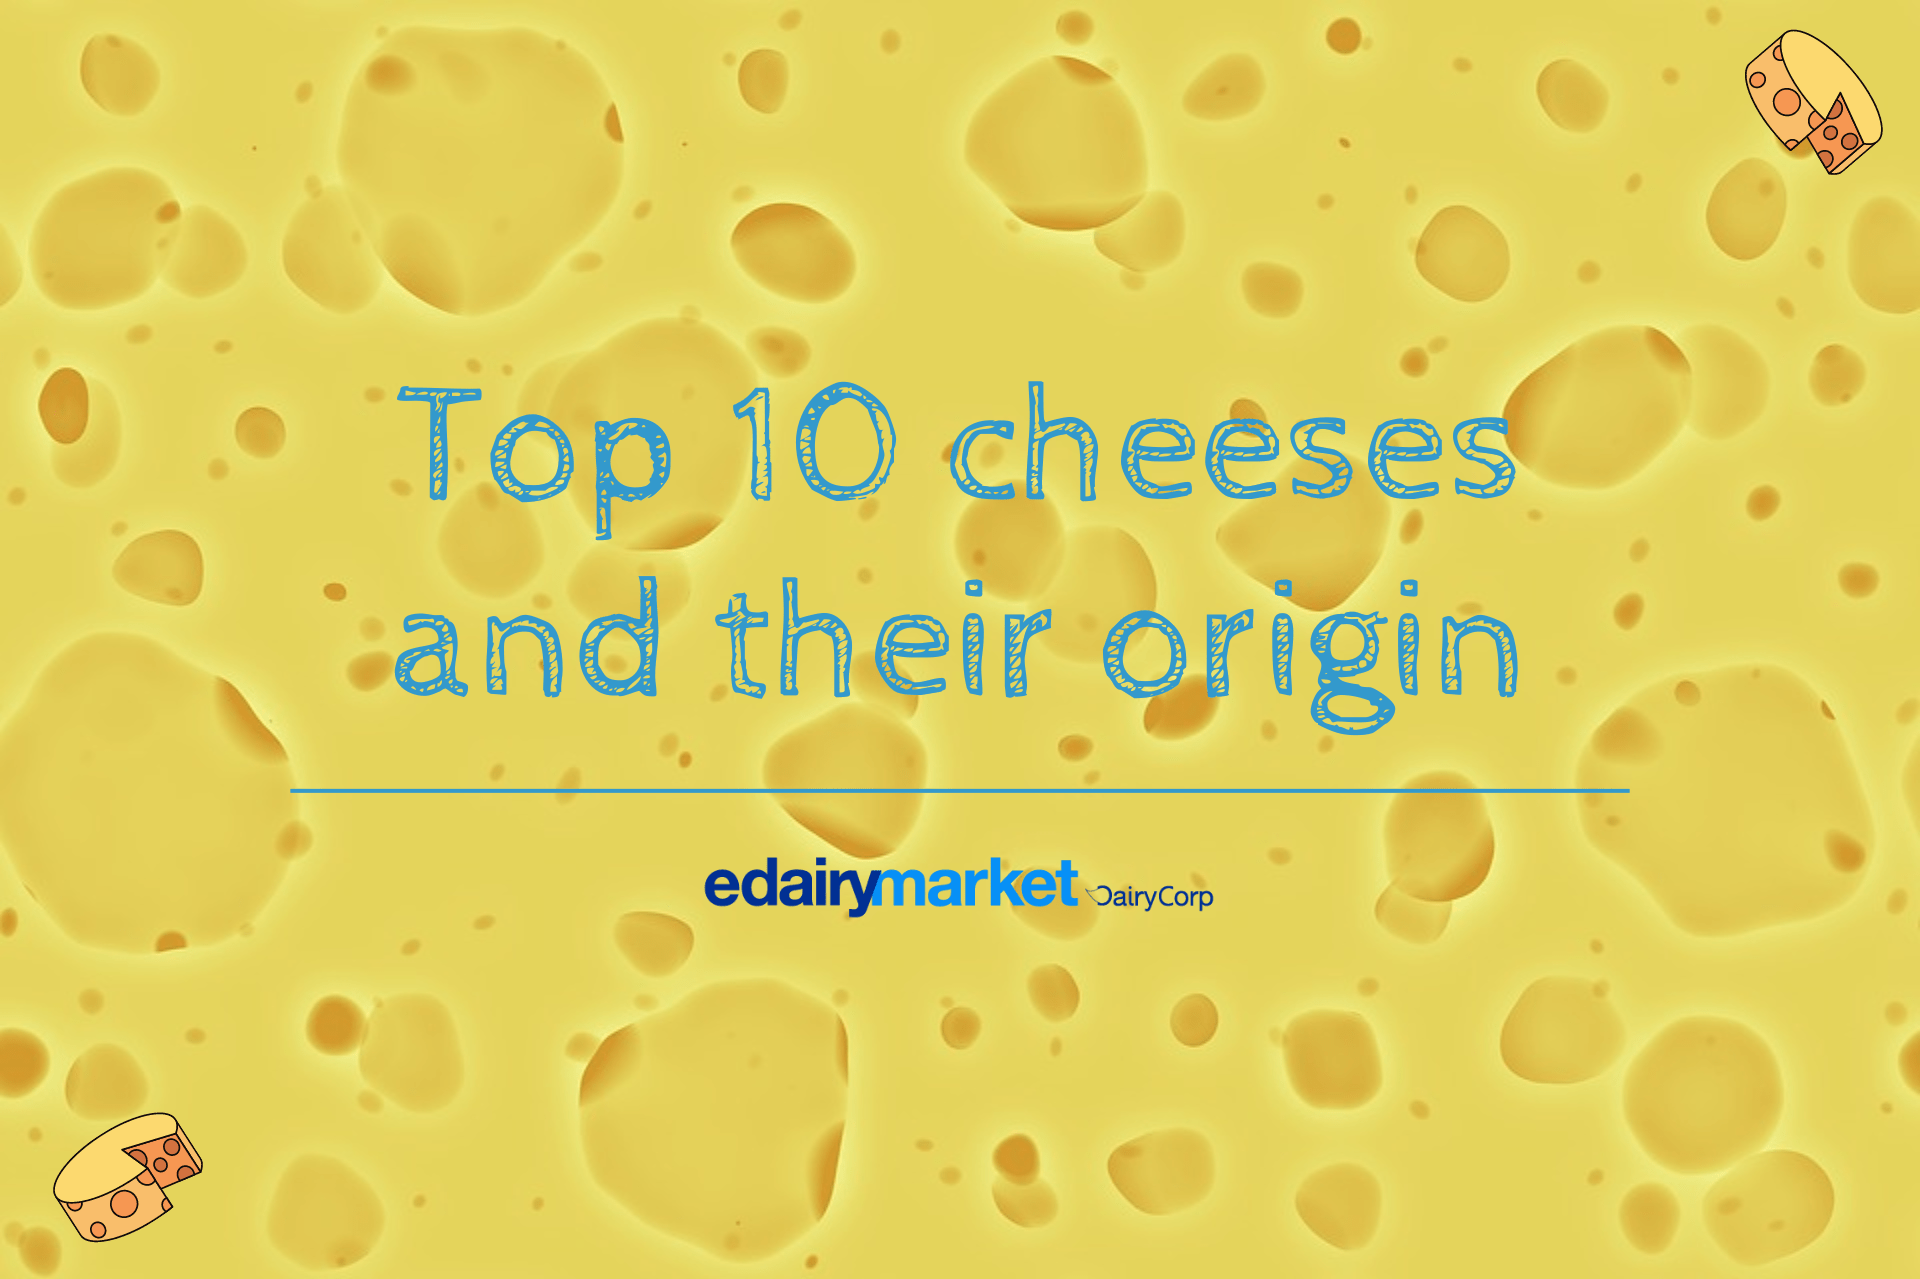 Top 10 cheeses their origin eDairyNews-IN